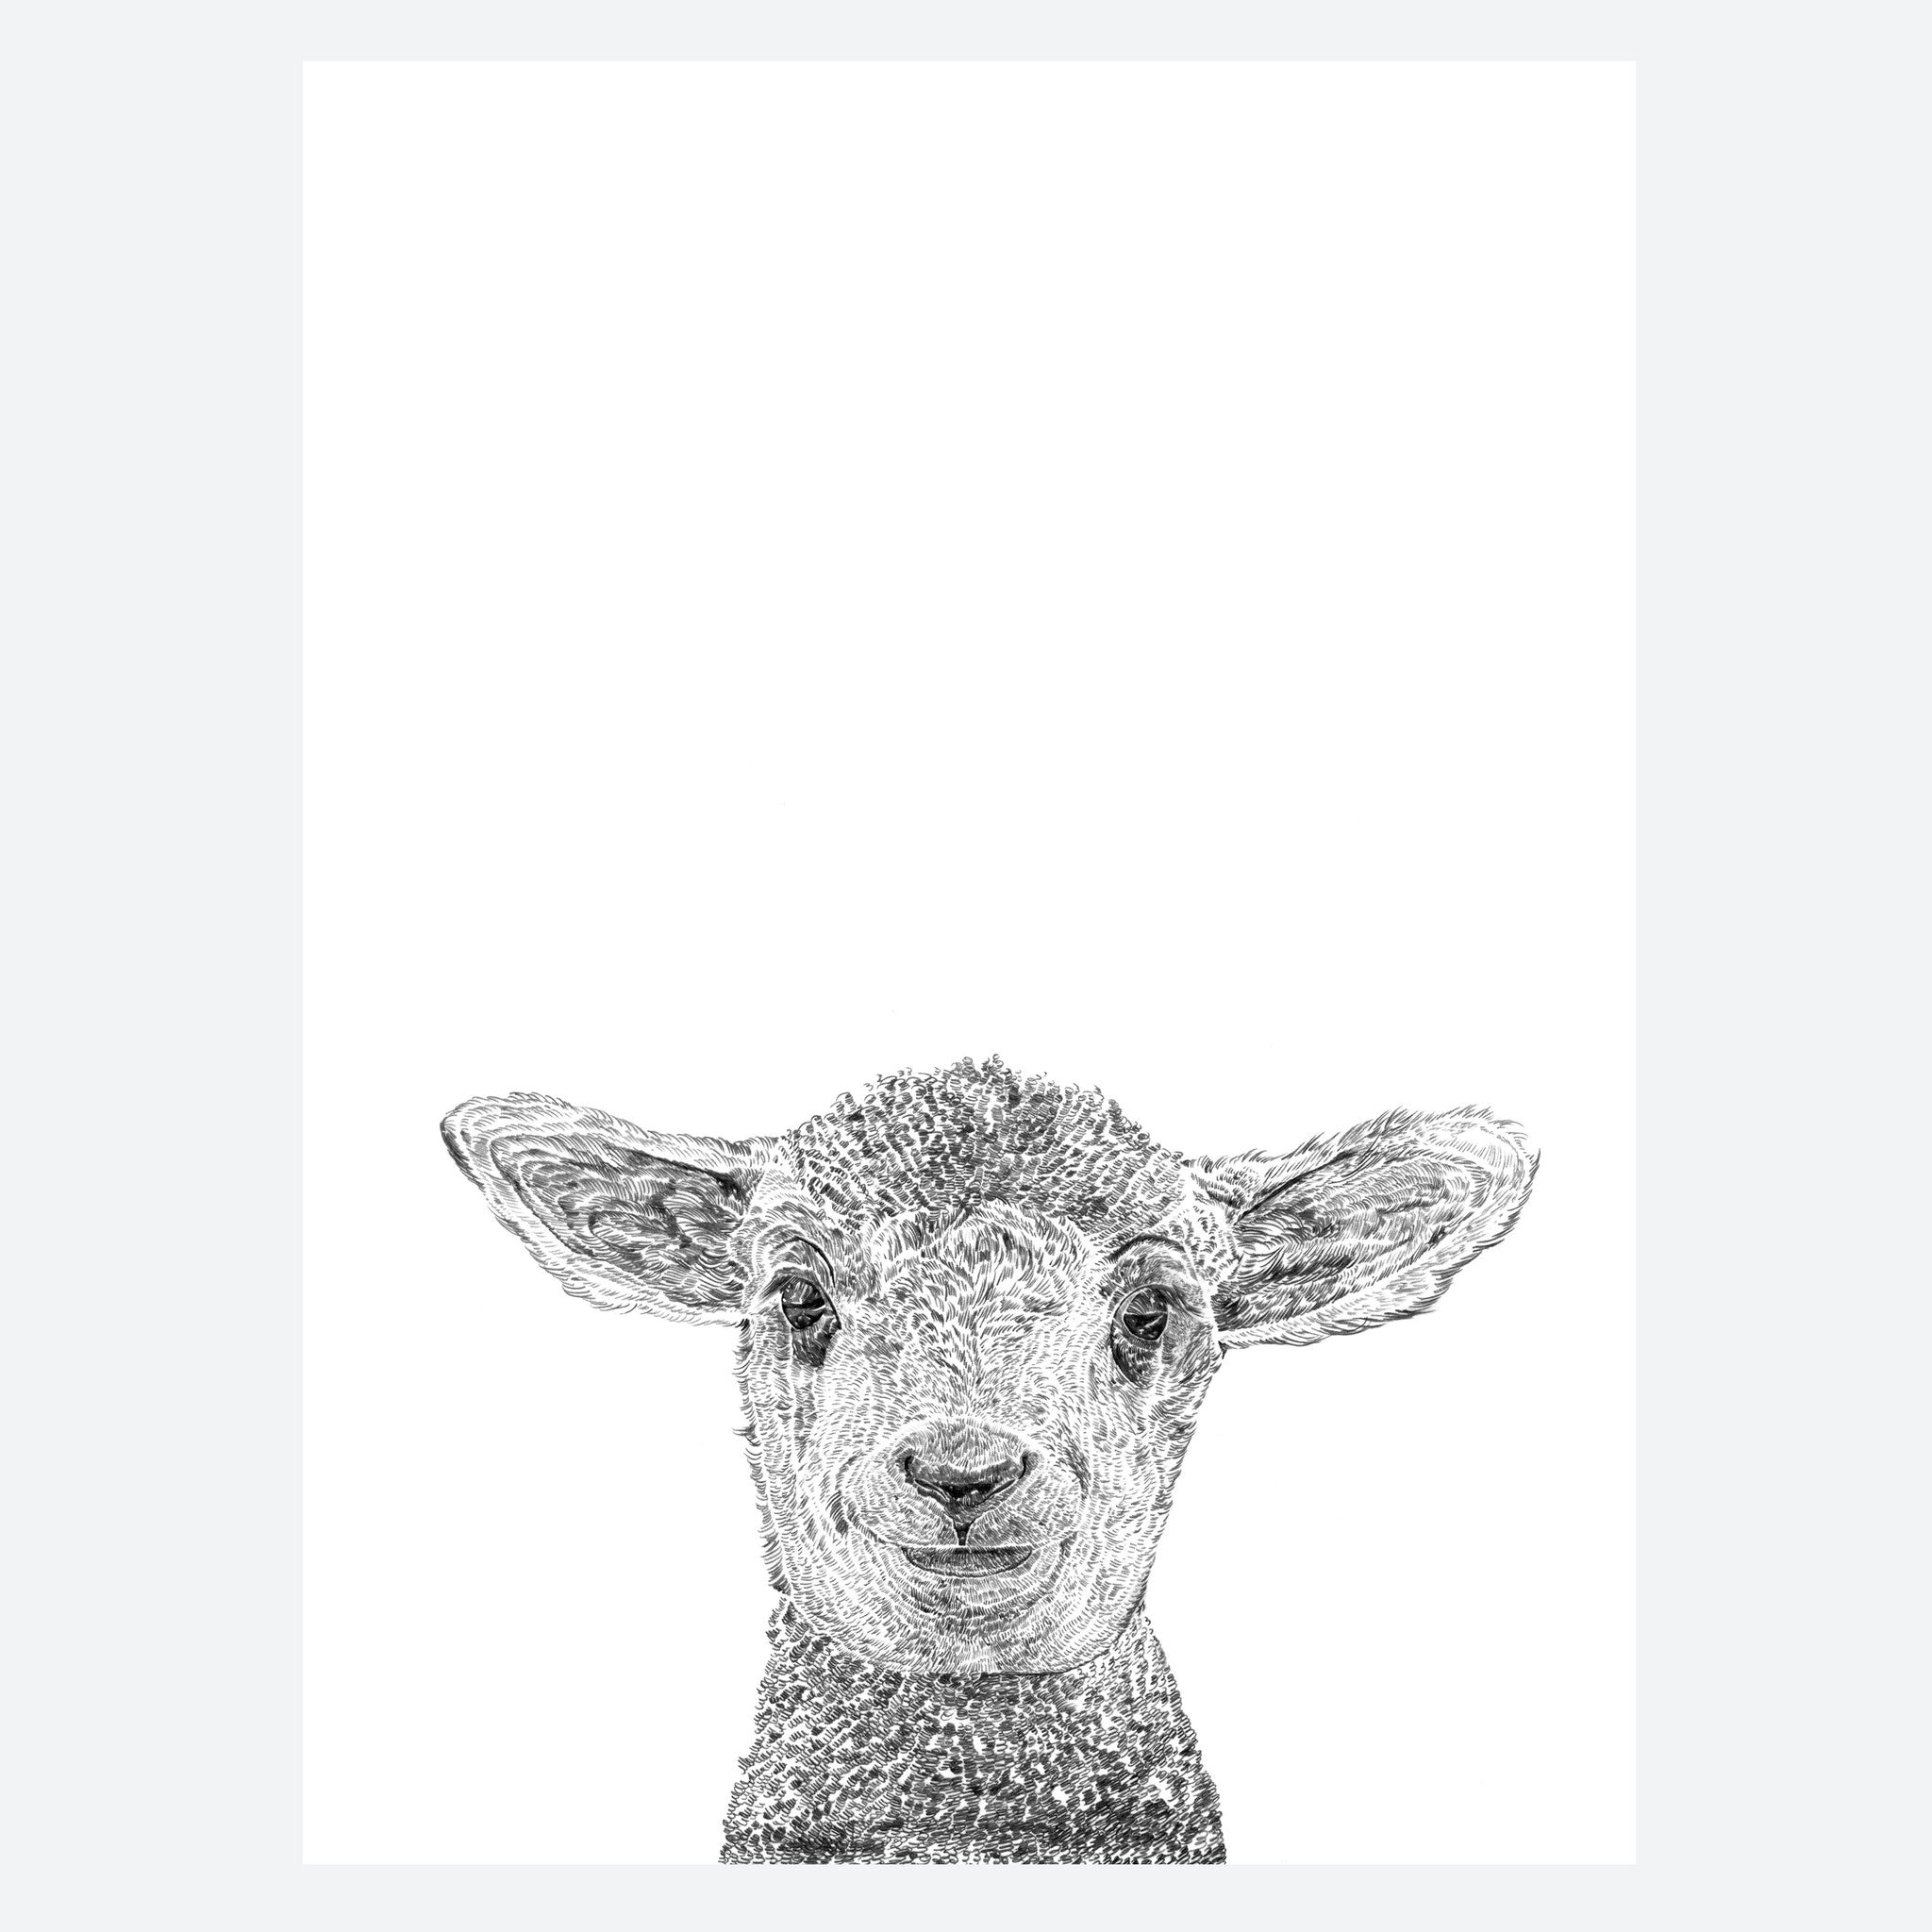 Lamb Print